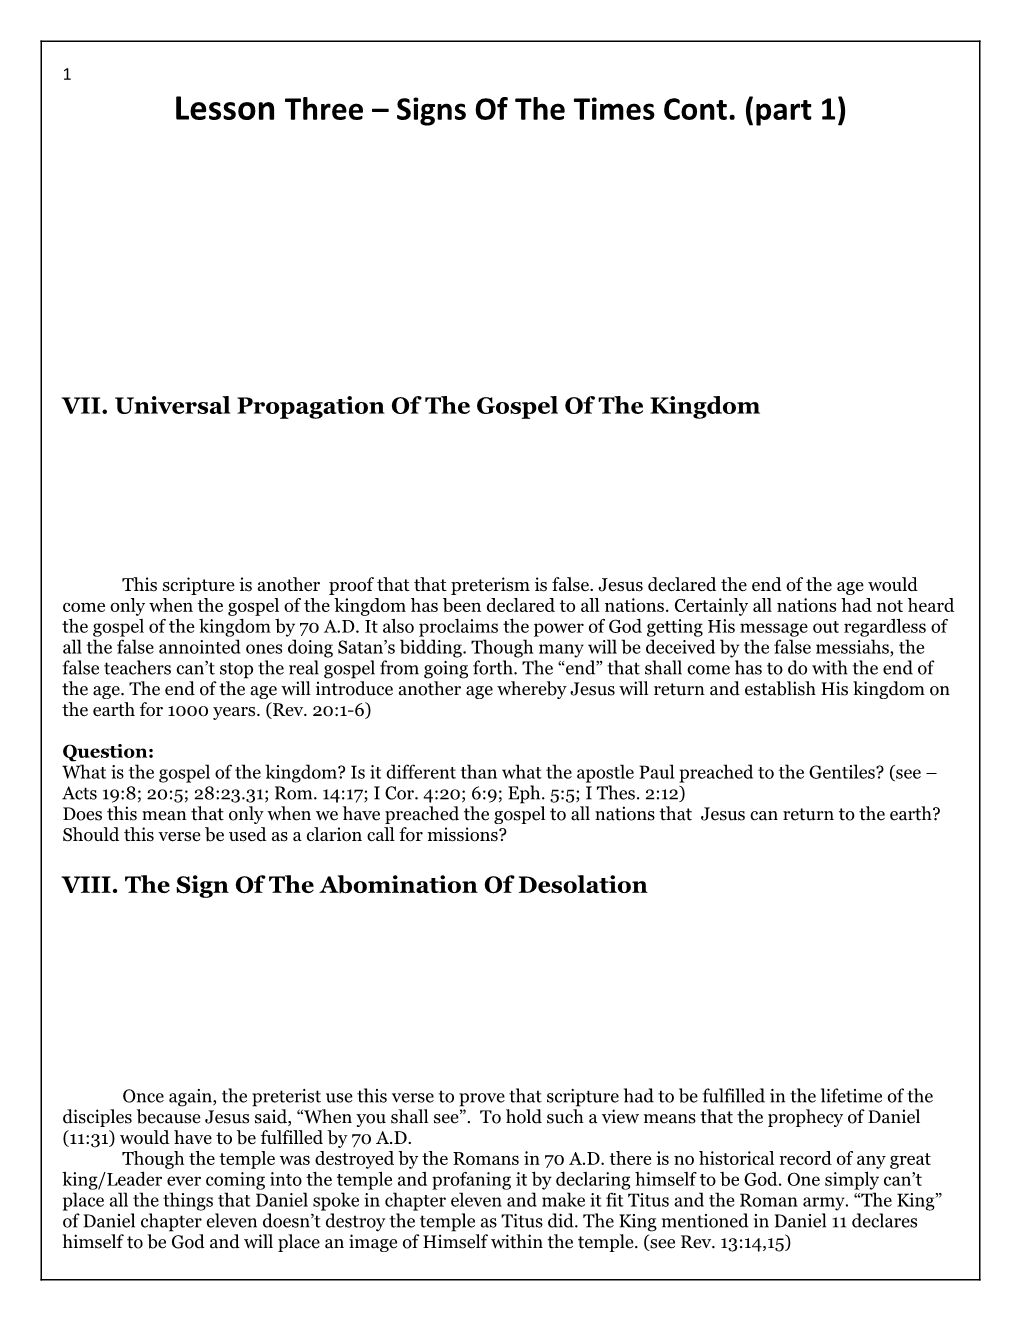 VII. Universal Propagation of the Gospel of the Kingdom